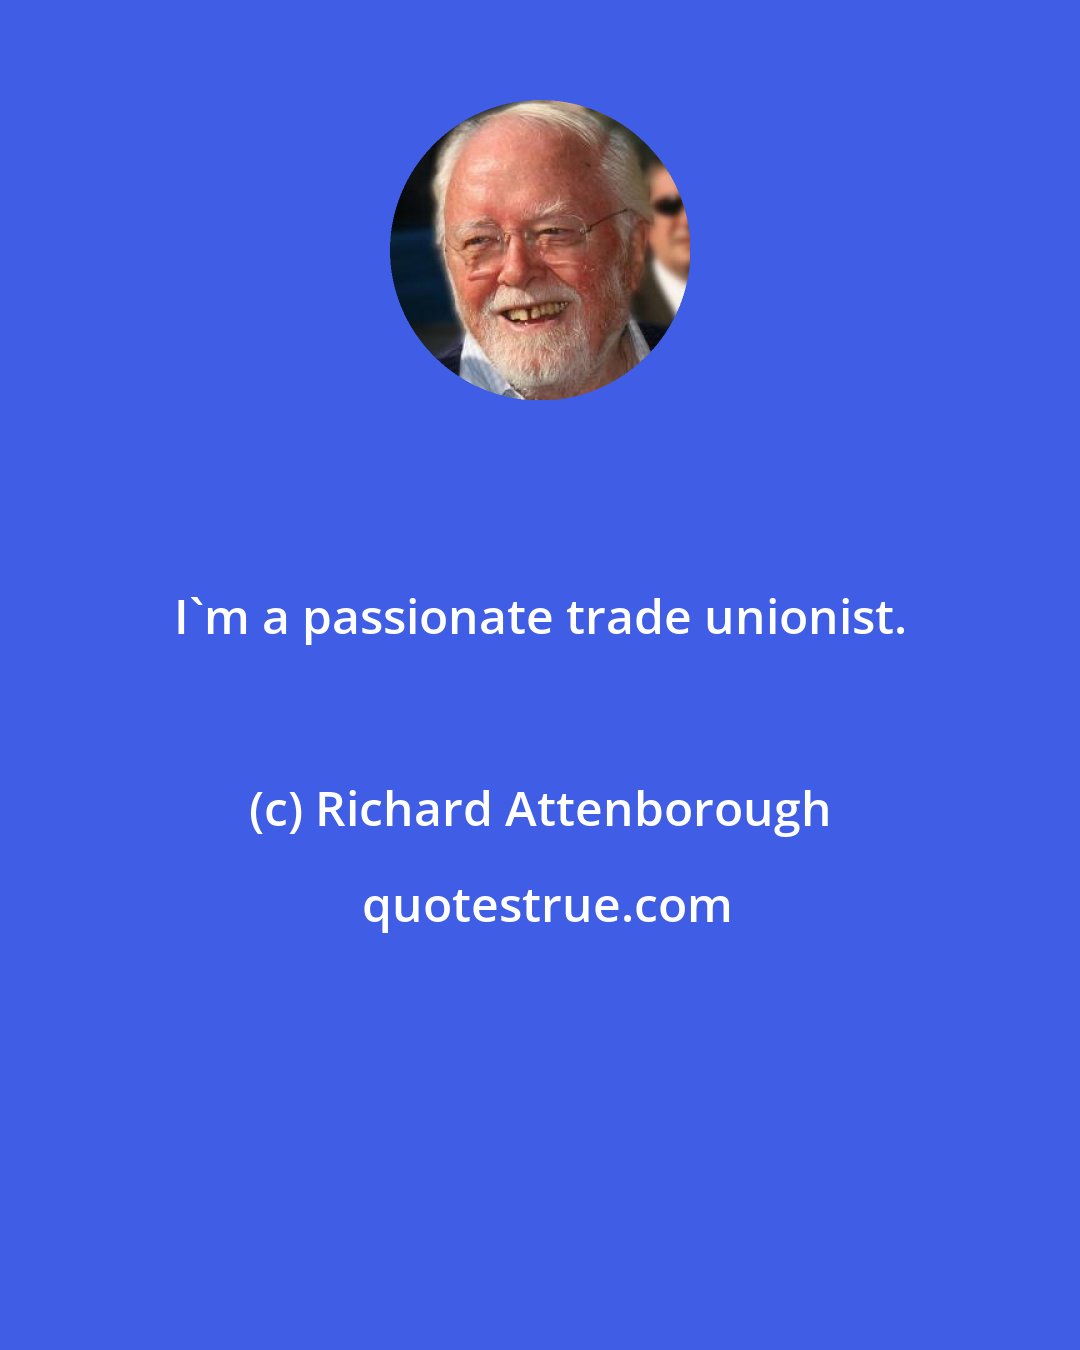 Richard Attenborough: I'm a passionate trade unionist.